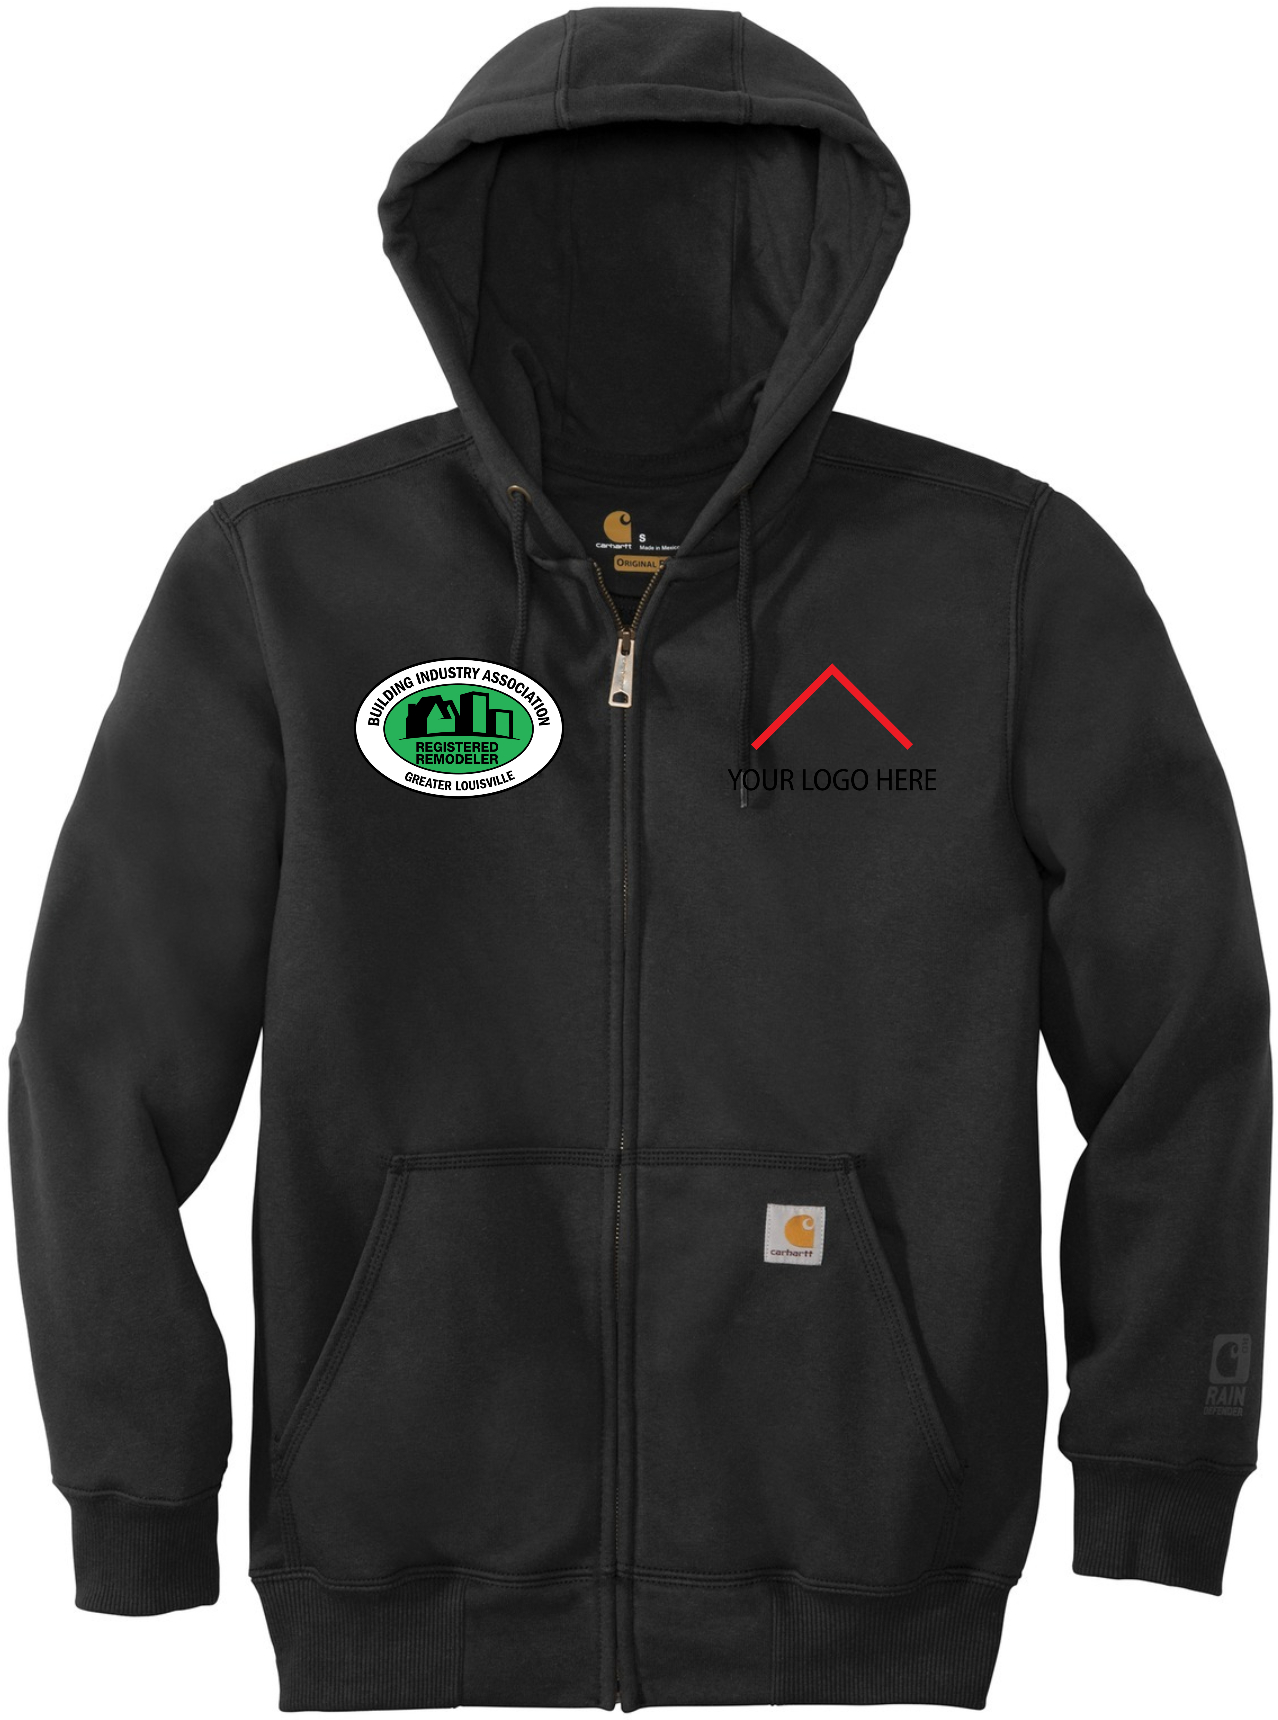 Registered Remodeler - Carhartt ® Rain Defender ® Paxton Heavyweight Hooded Zip-Front Sweatshirt - CT100614 (Add Your Own)